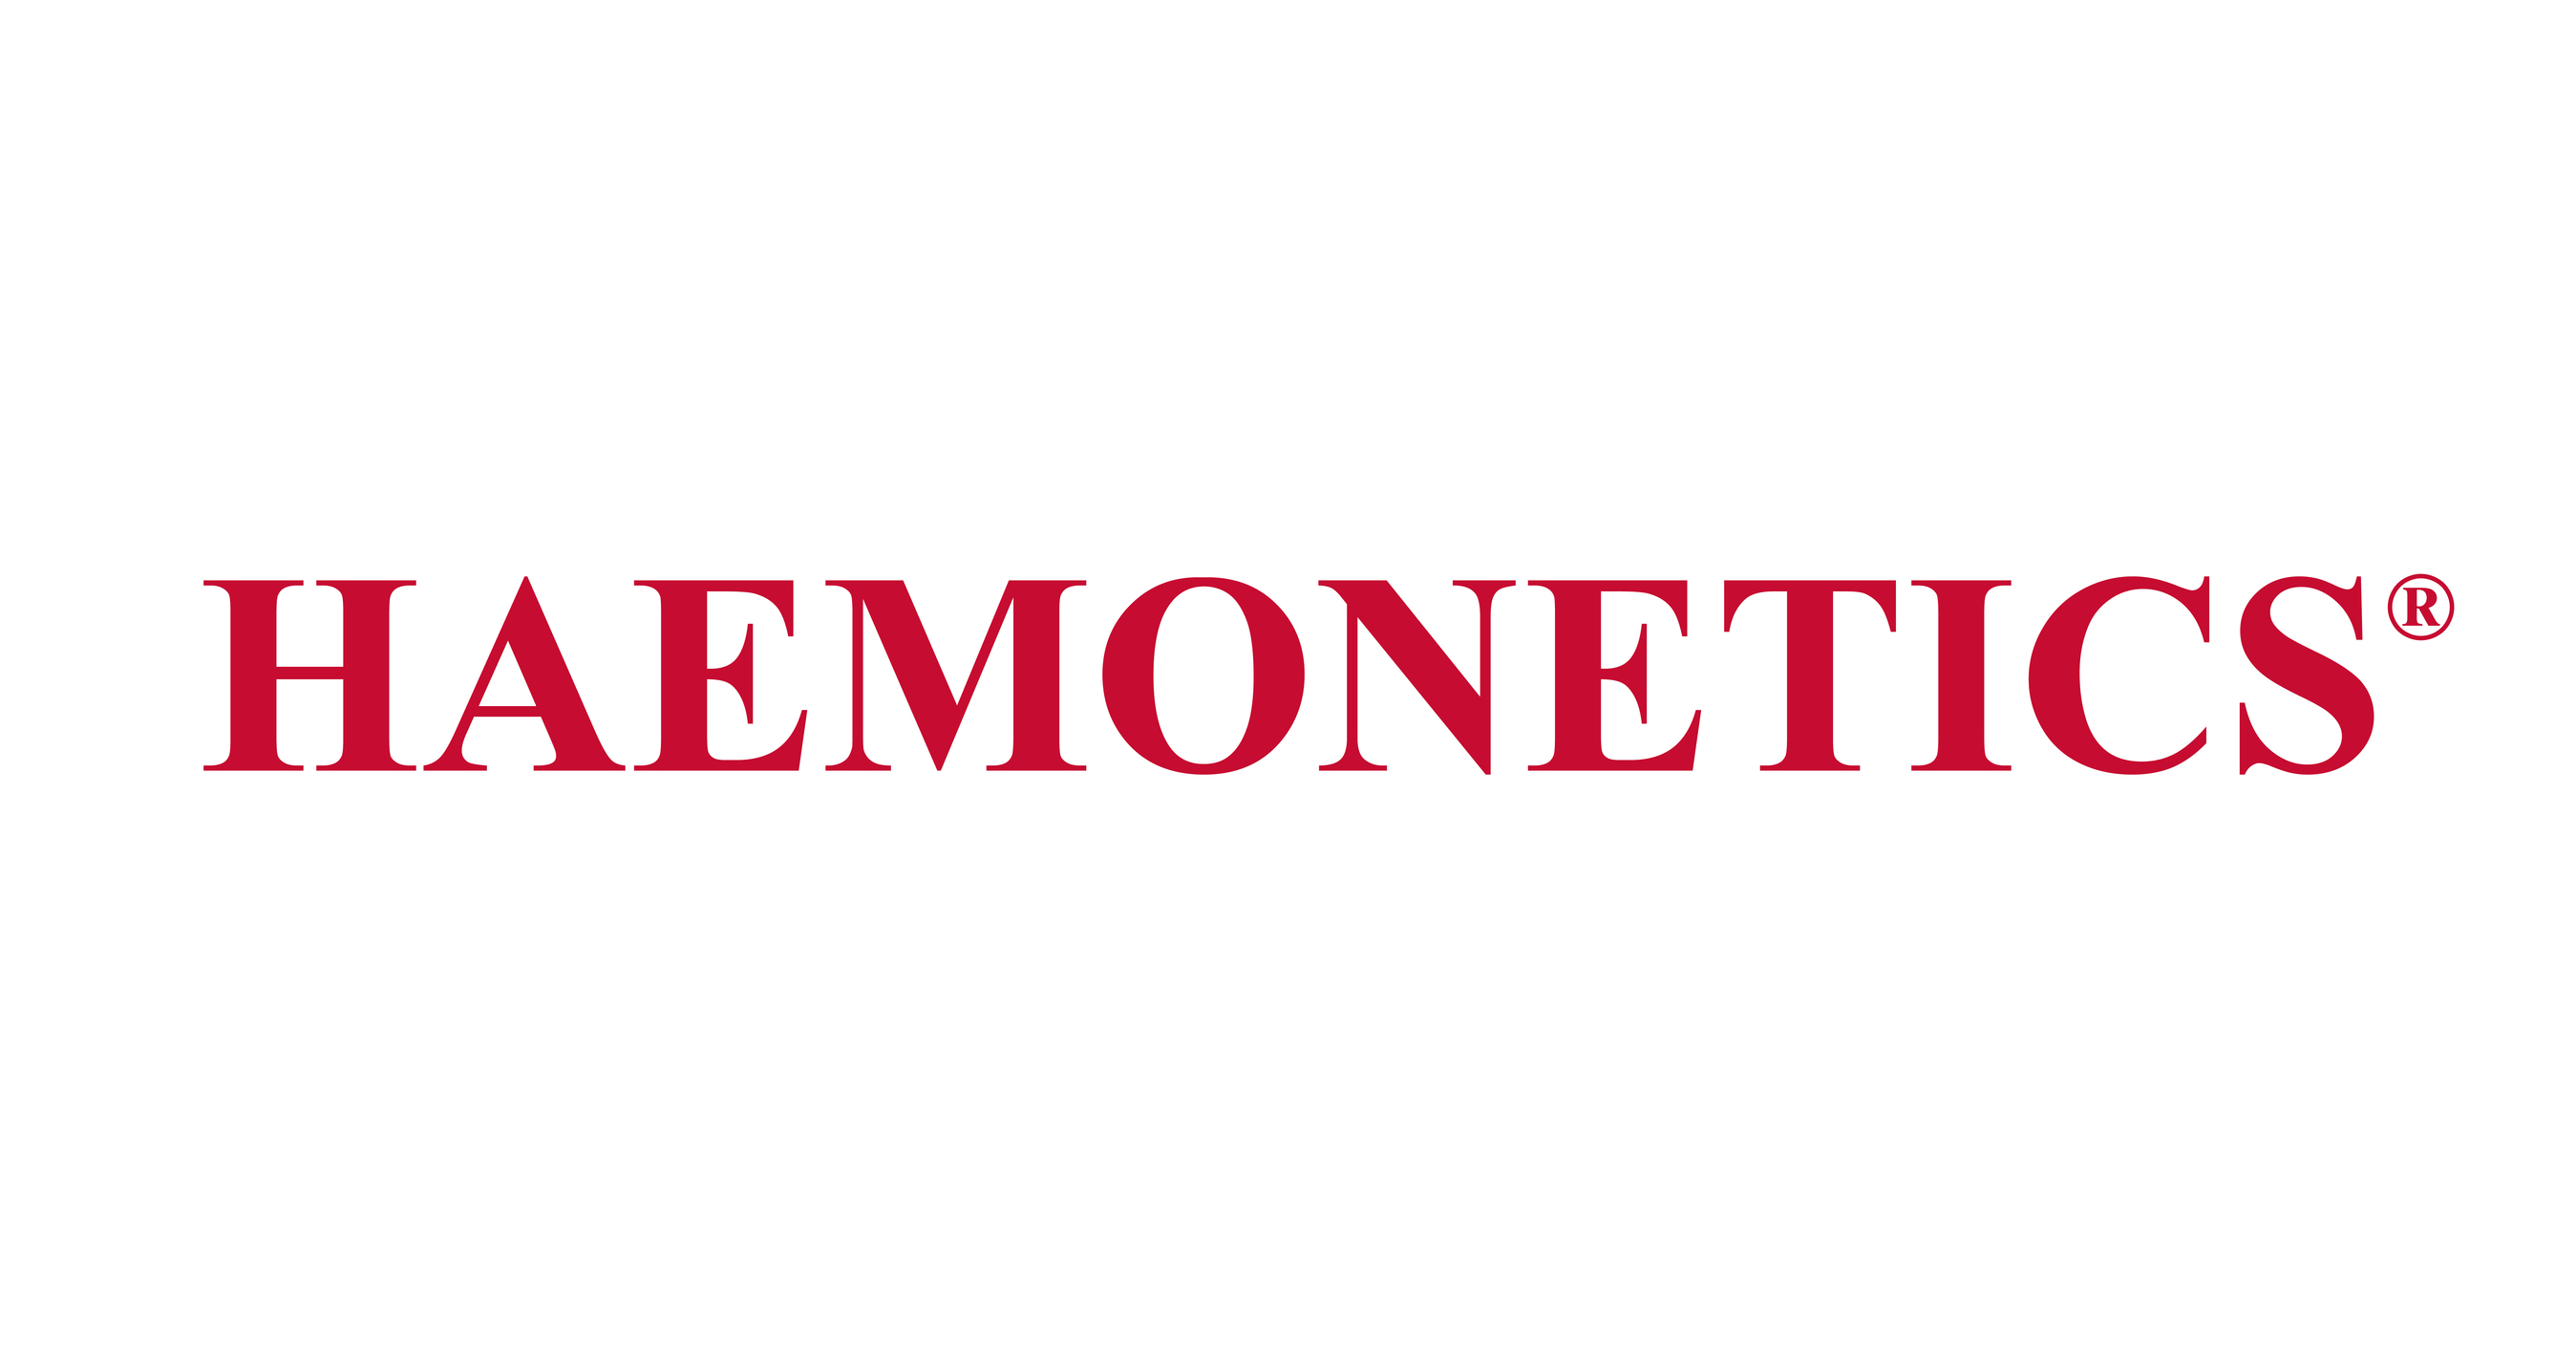 Haemonetics Corporation Logo